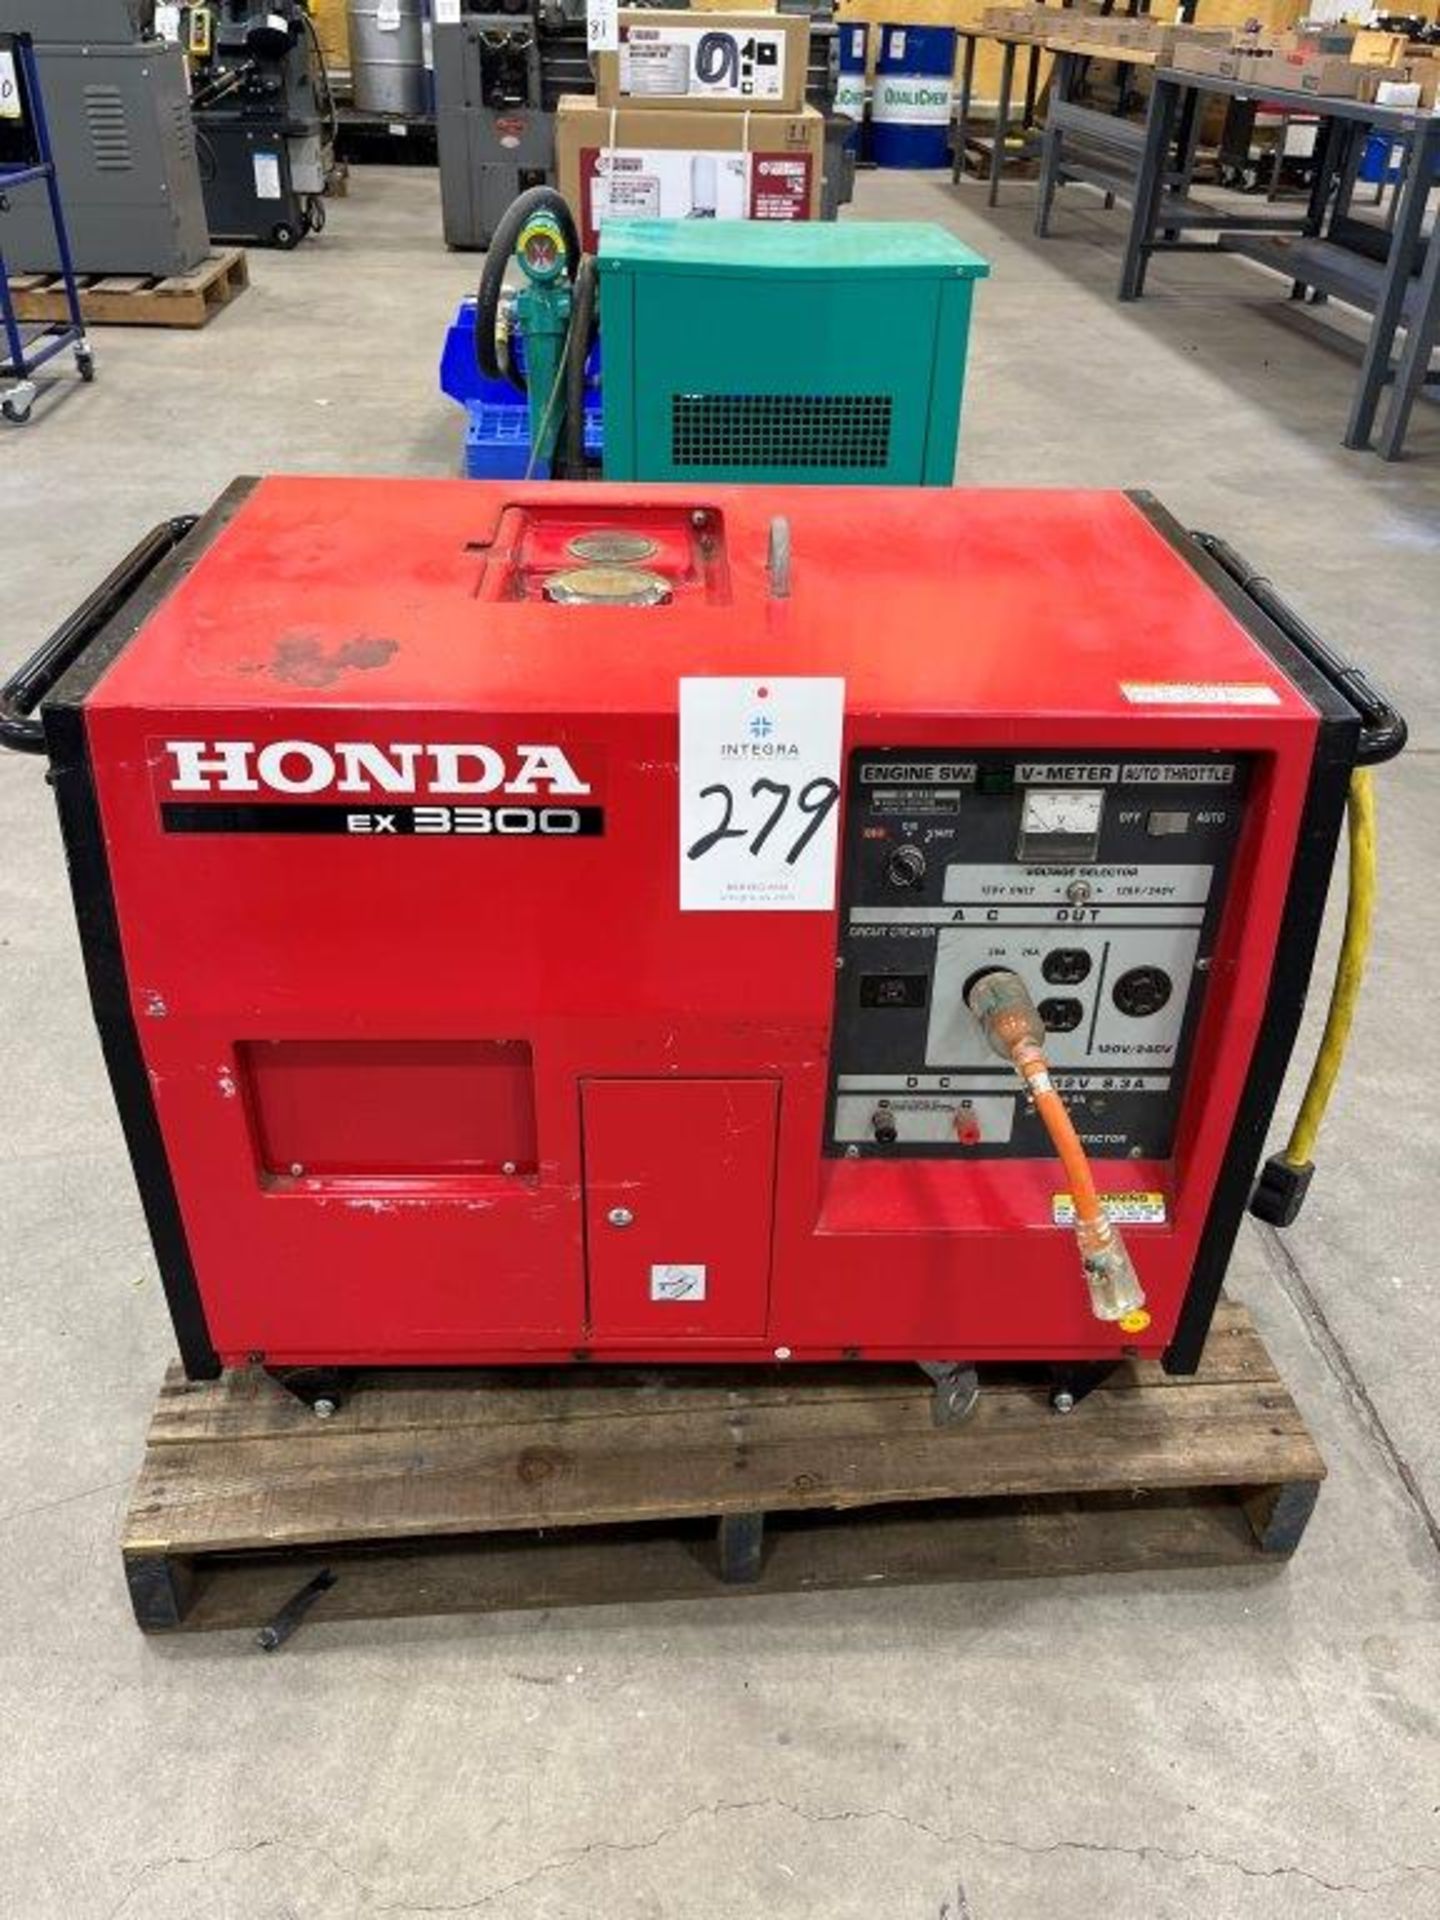 Honda Ex 3300 Gas Powered Generator